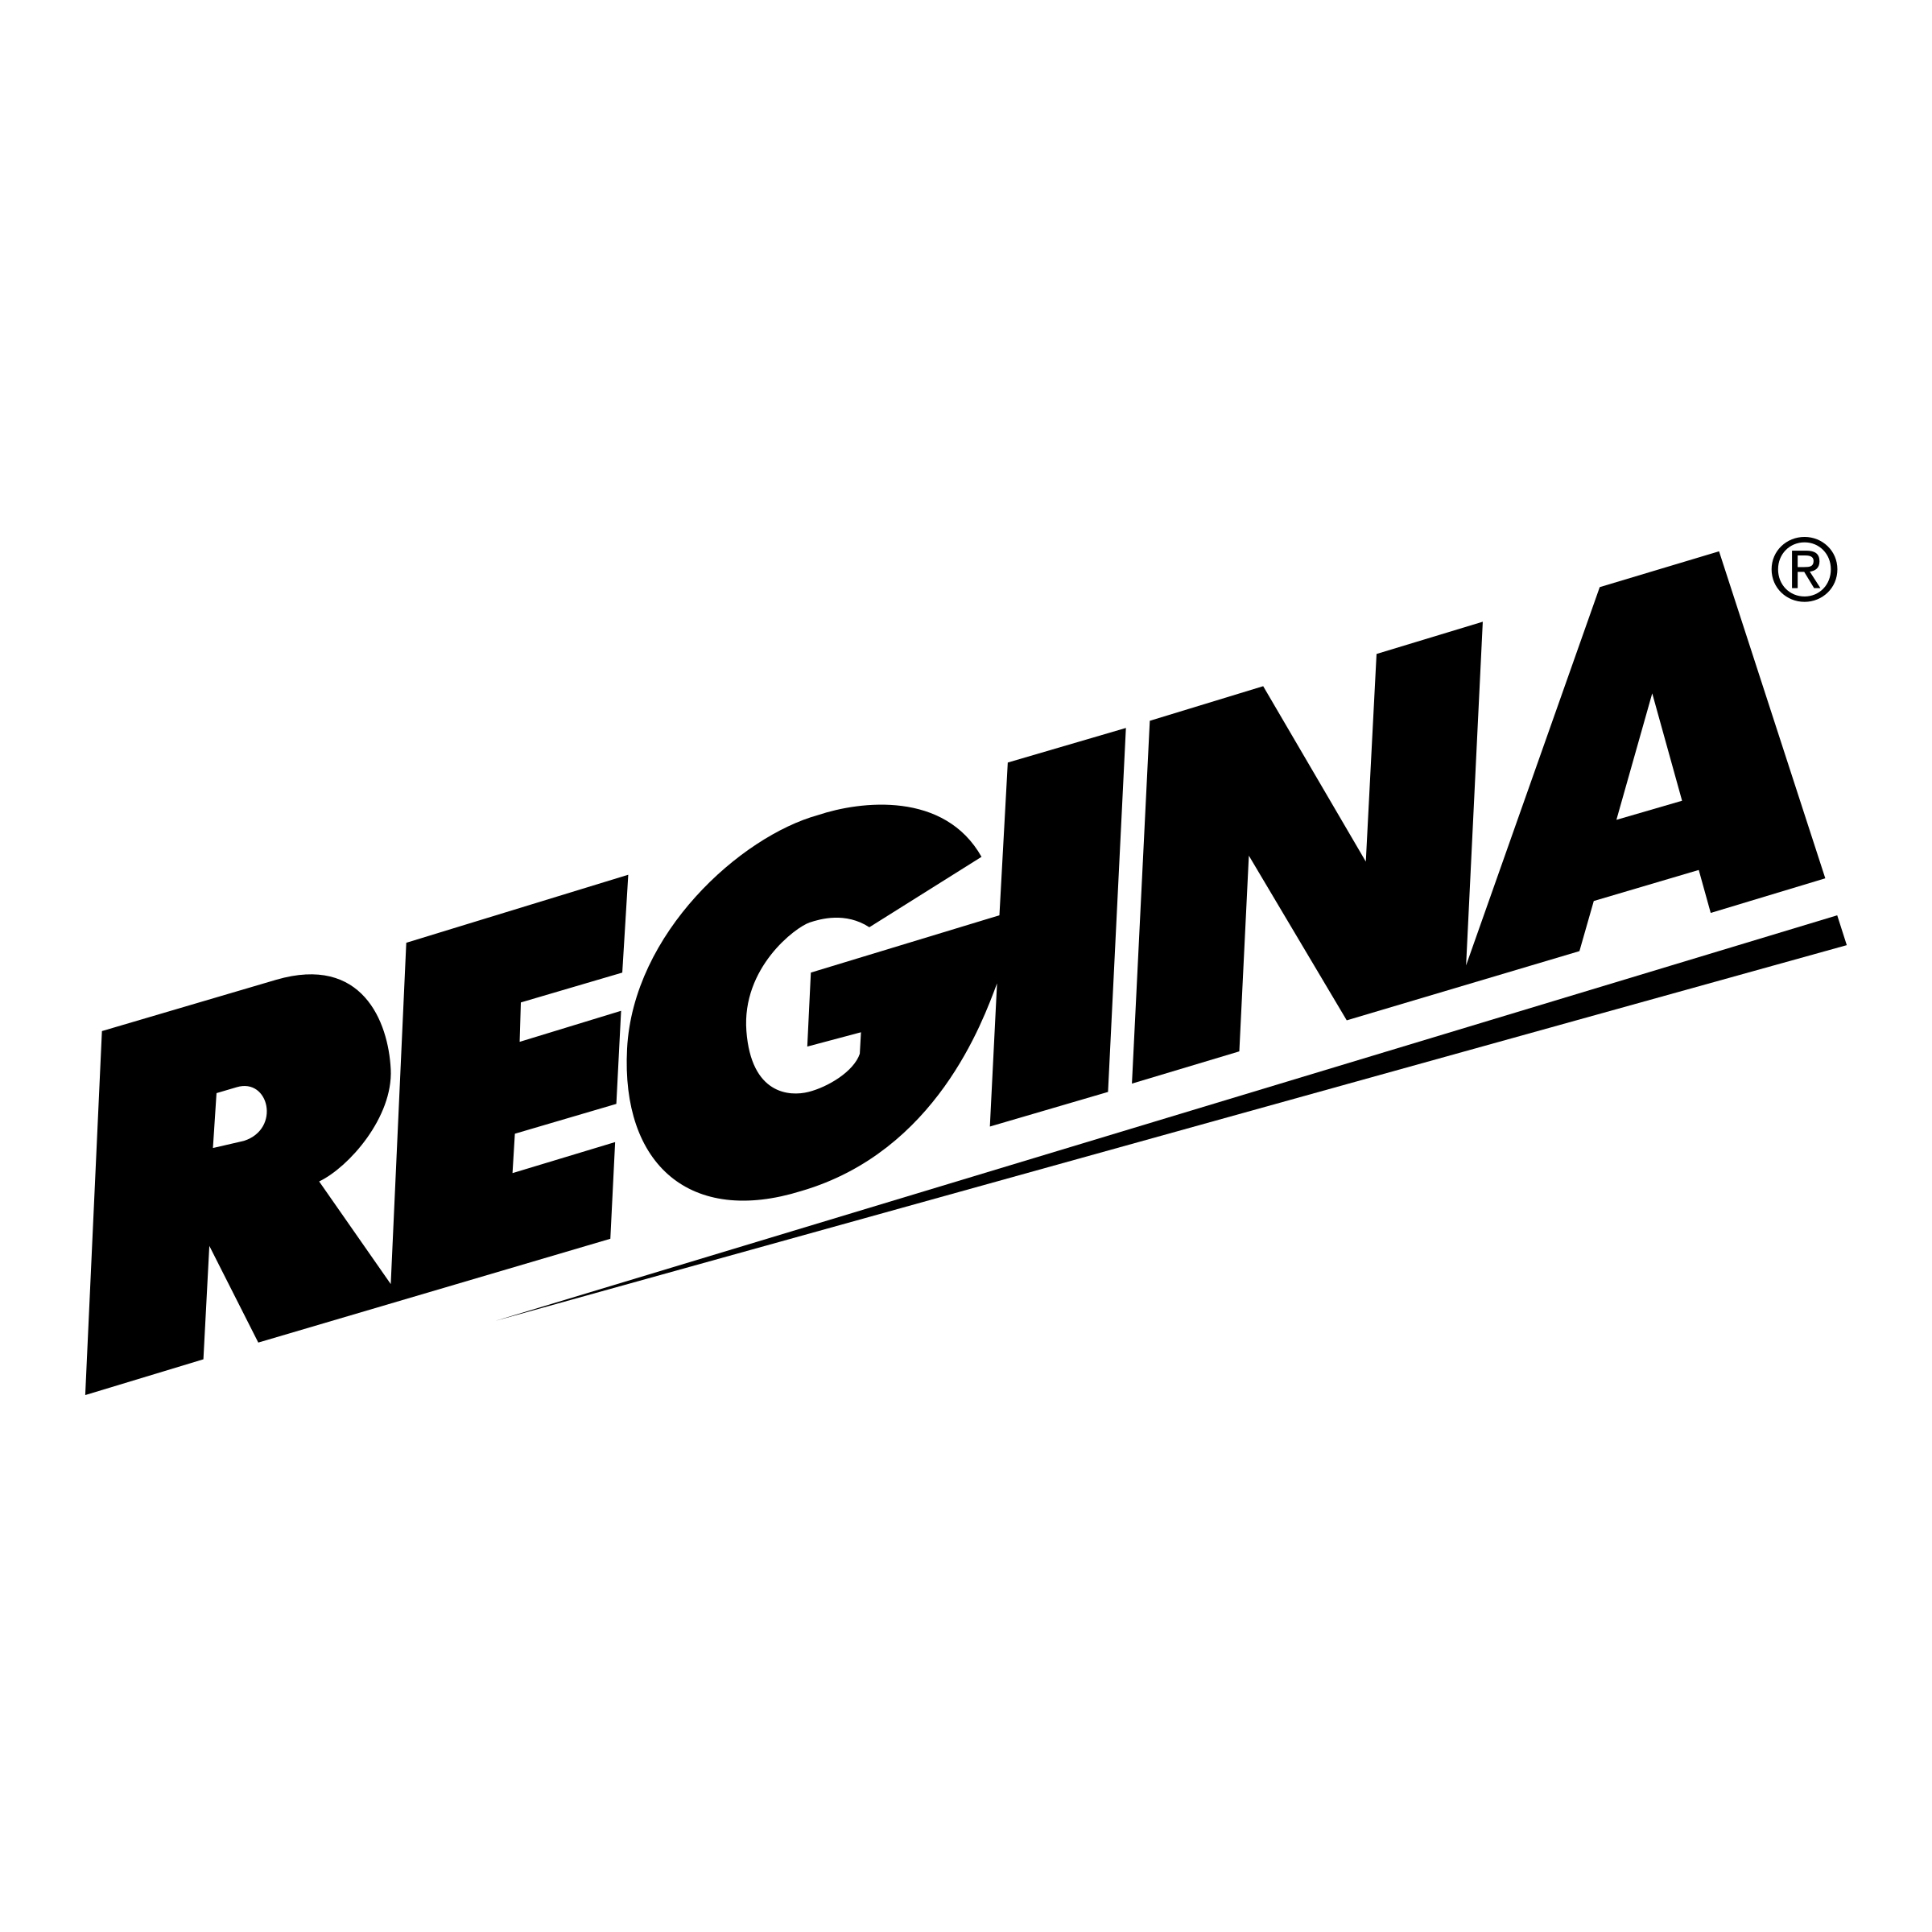 Regina Logo - Regina Logo PNG Transparent & SVG Vector - Freebie Supply